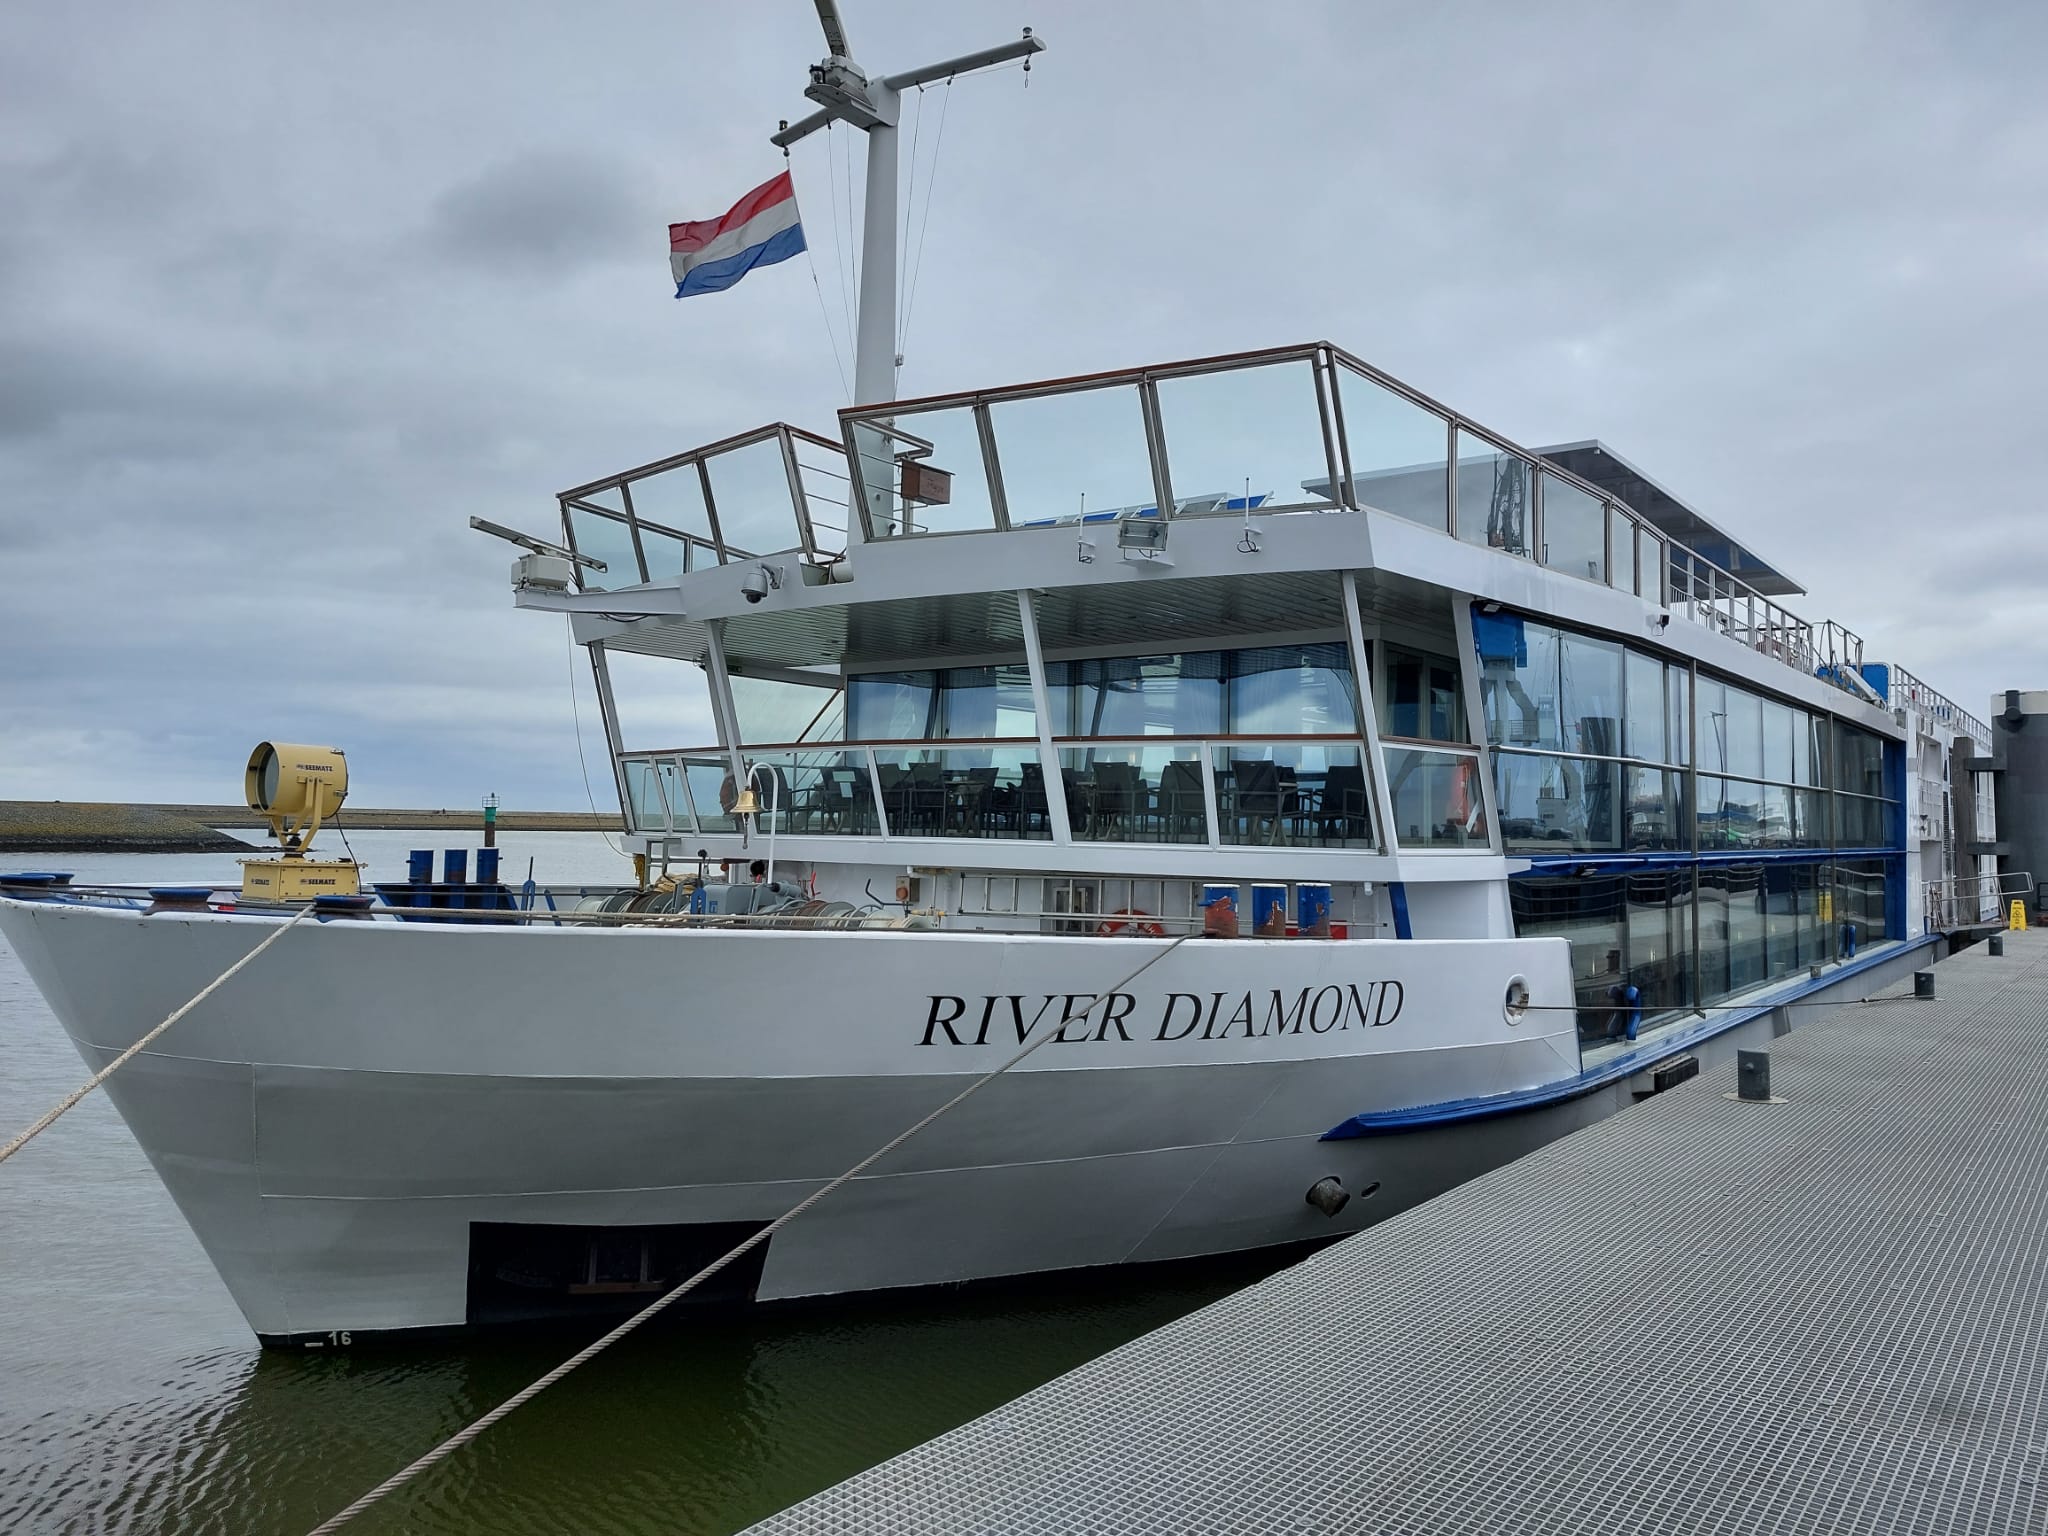 River-Diamond-Rivier-Cruise-Tulpen-Cruise